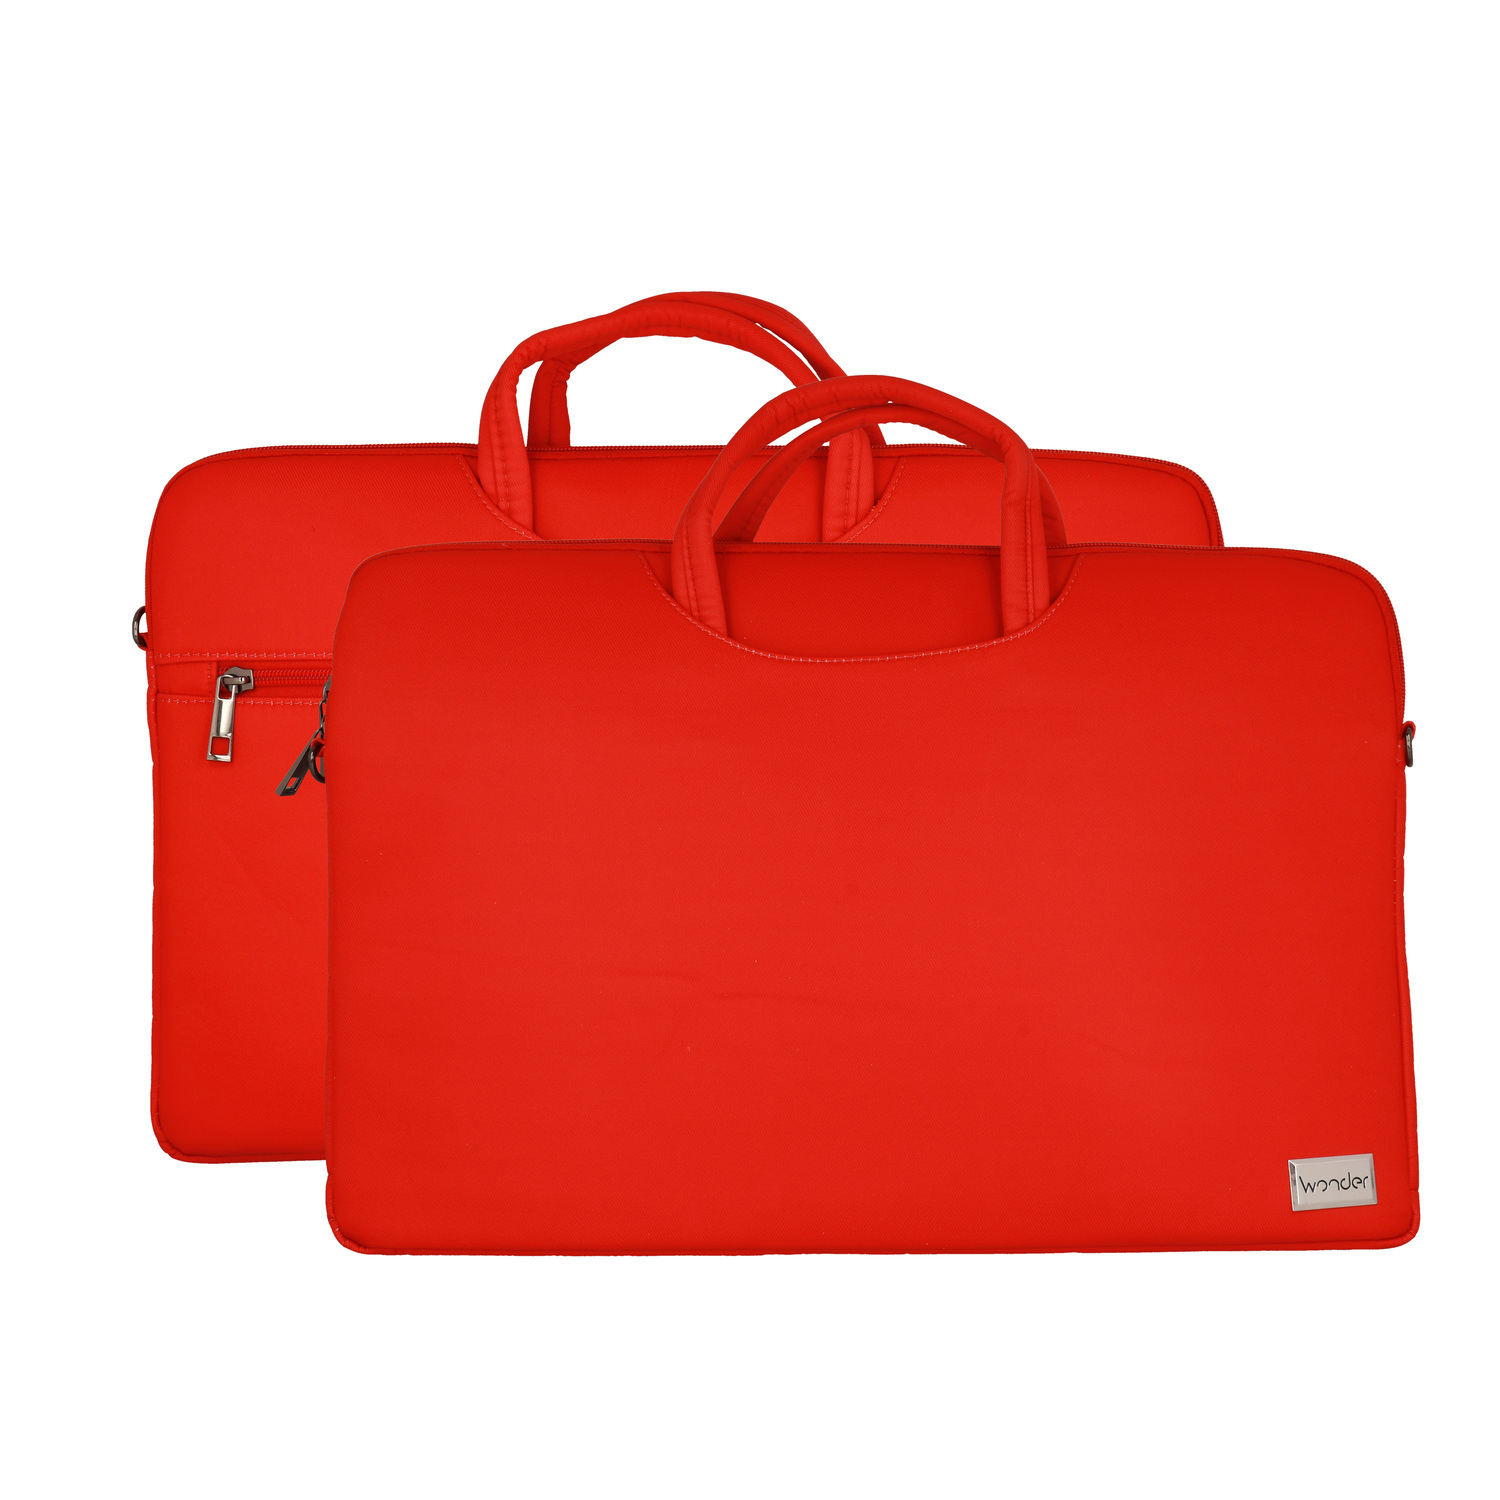 Wonder Briefcase Laptop Sleeve Bag Case Cover 13-14'', Red